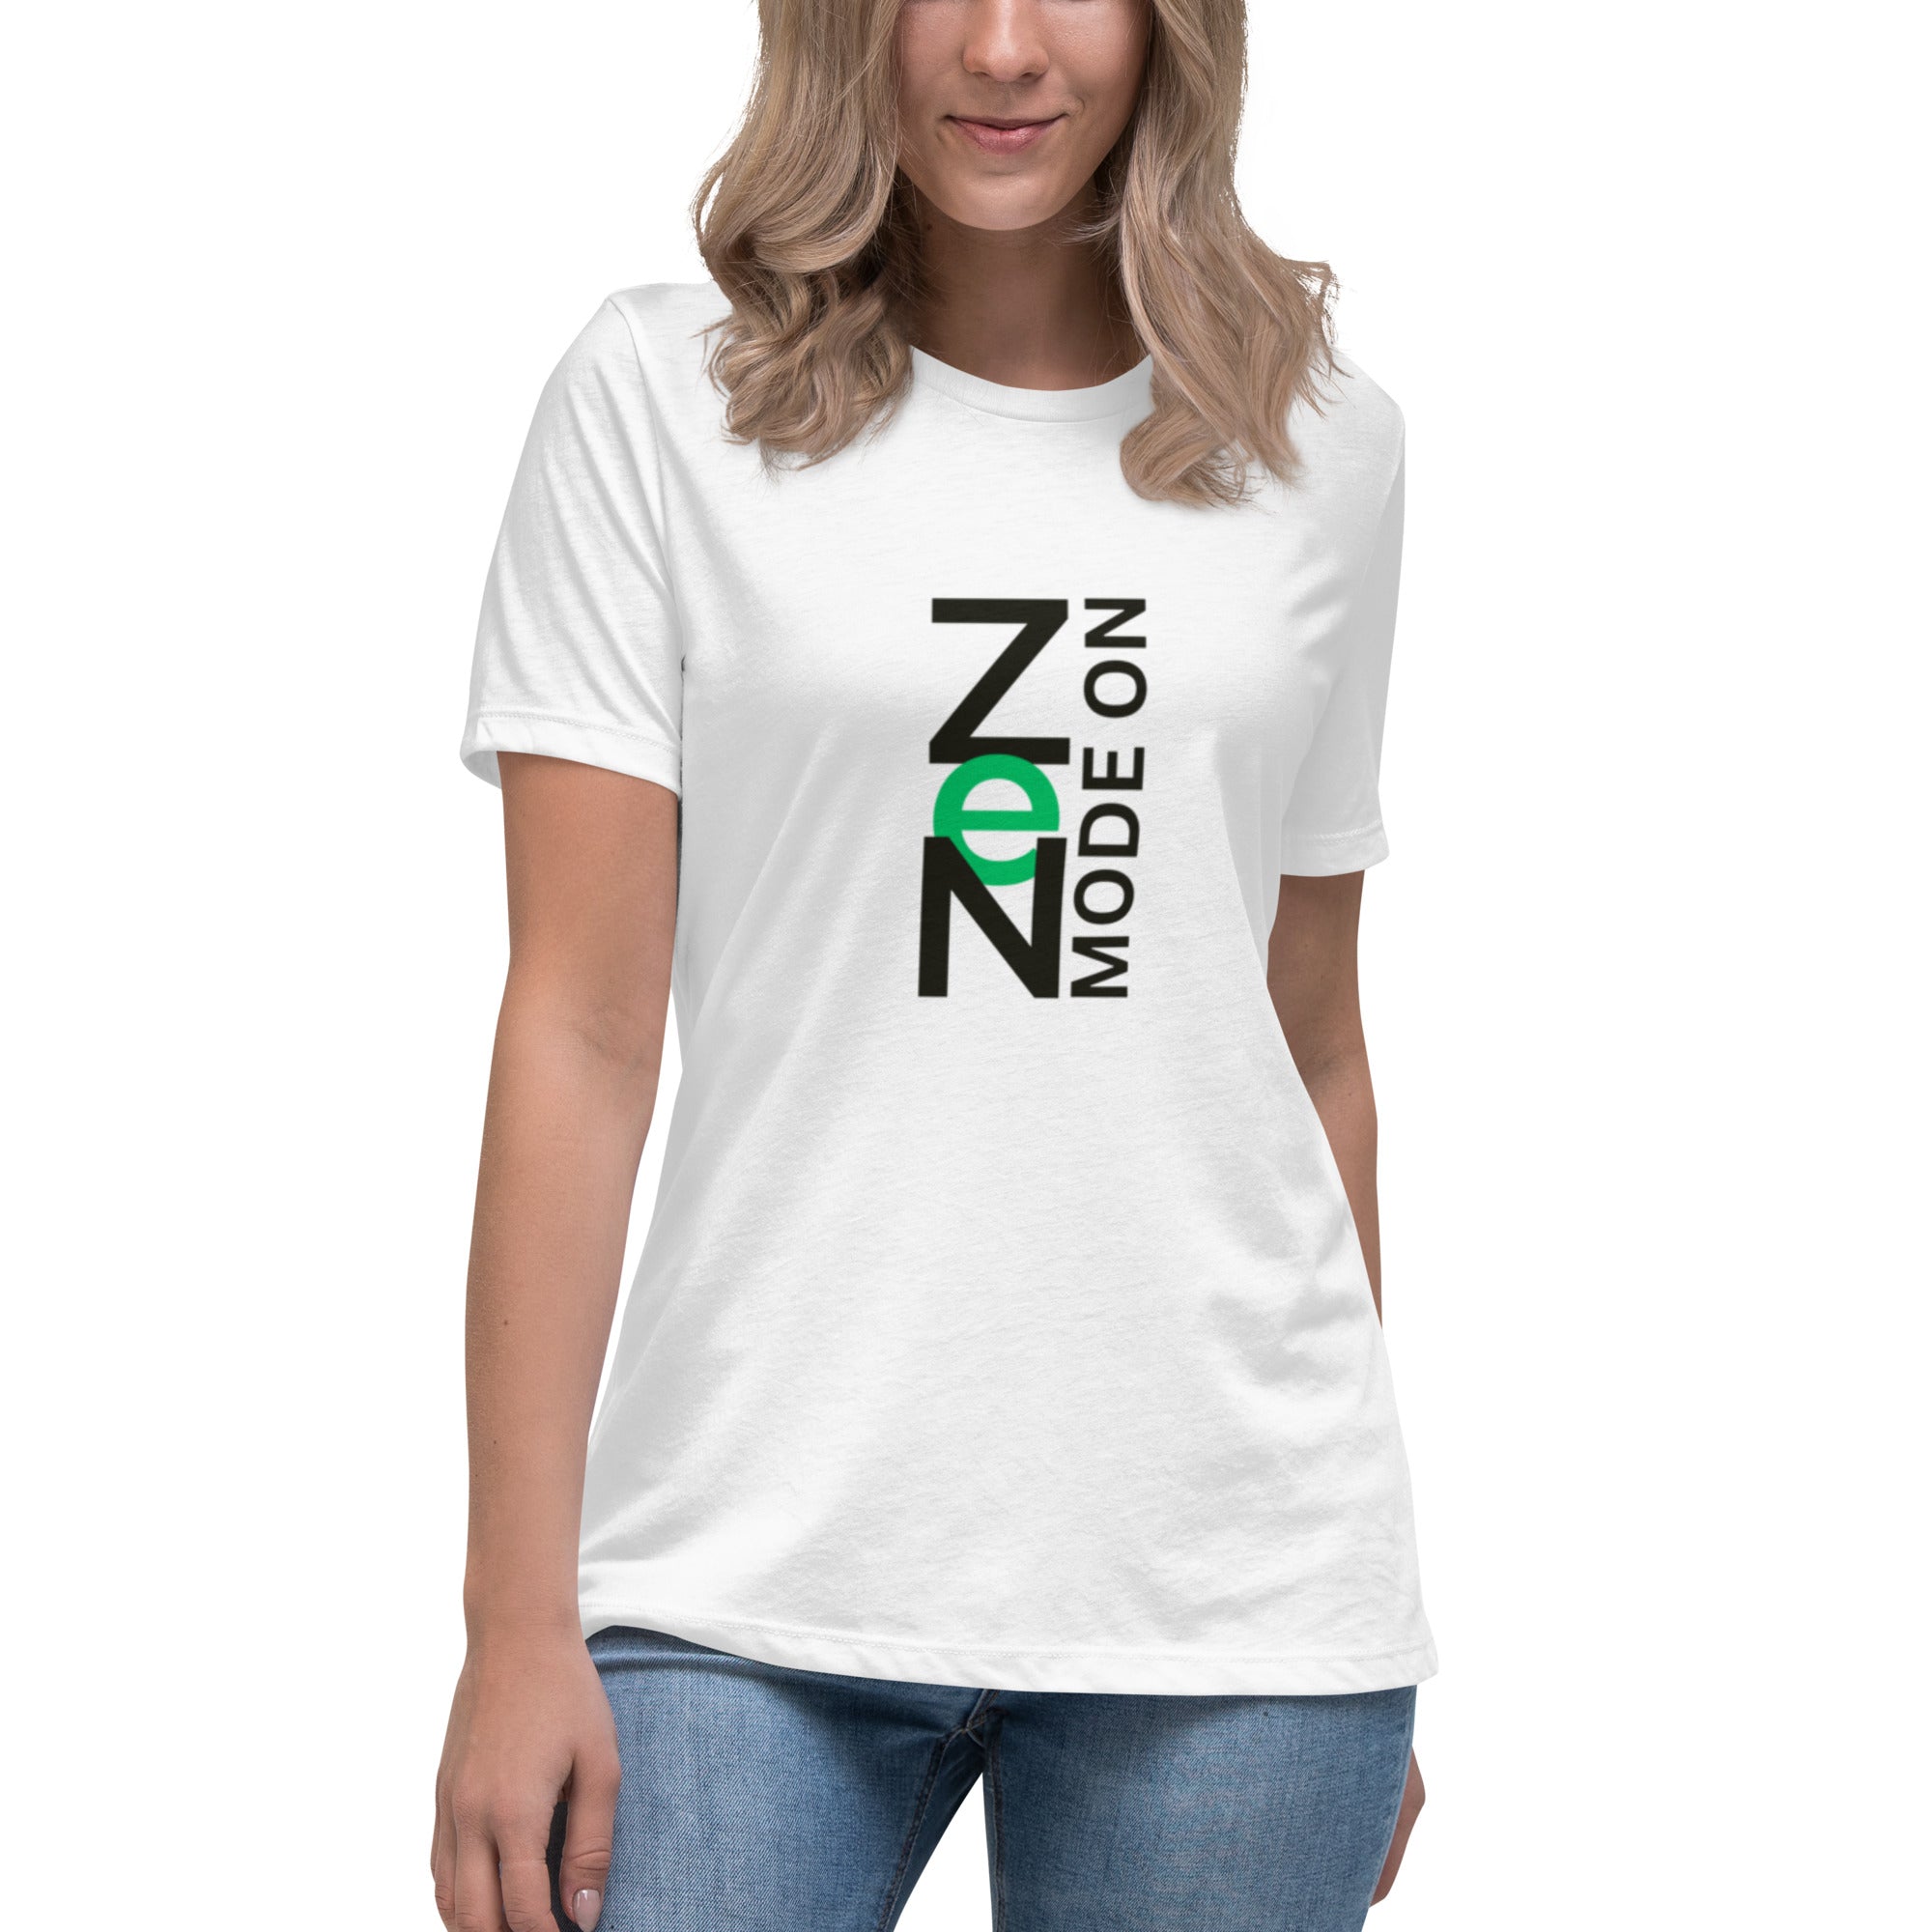 Zen Mode On Women's T-Shirt - POD SARTO